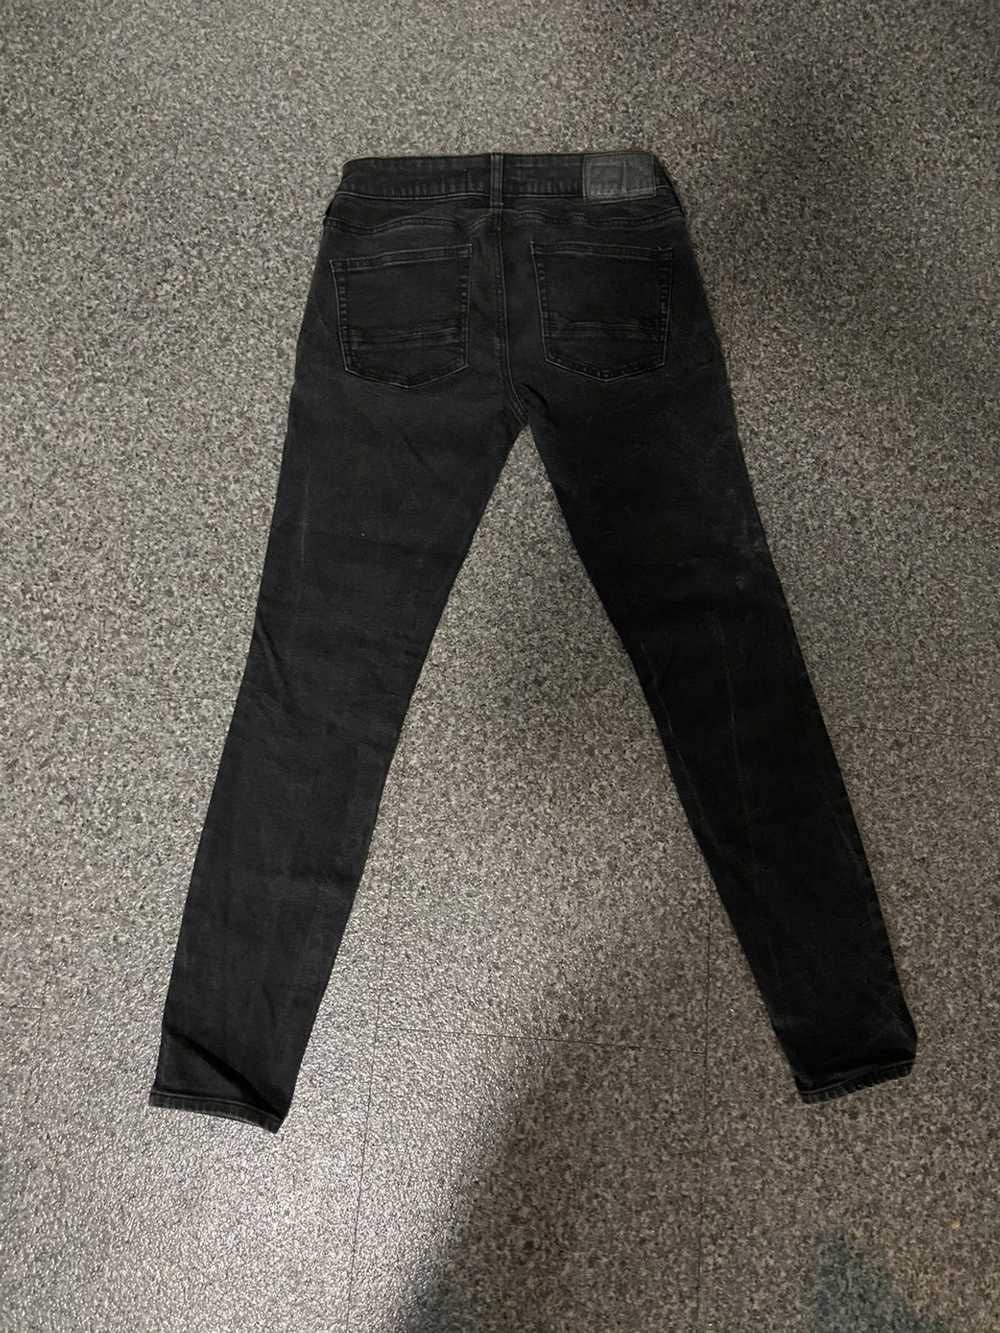 Pacsun Pacsun Black skinny Jeans-Sz(29x30) - image 2